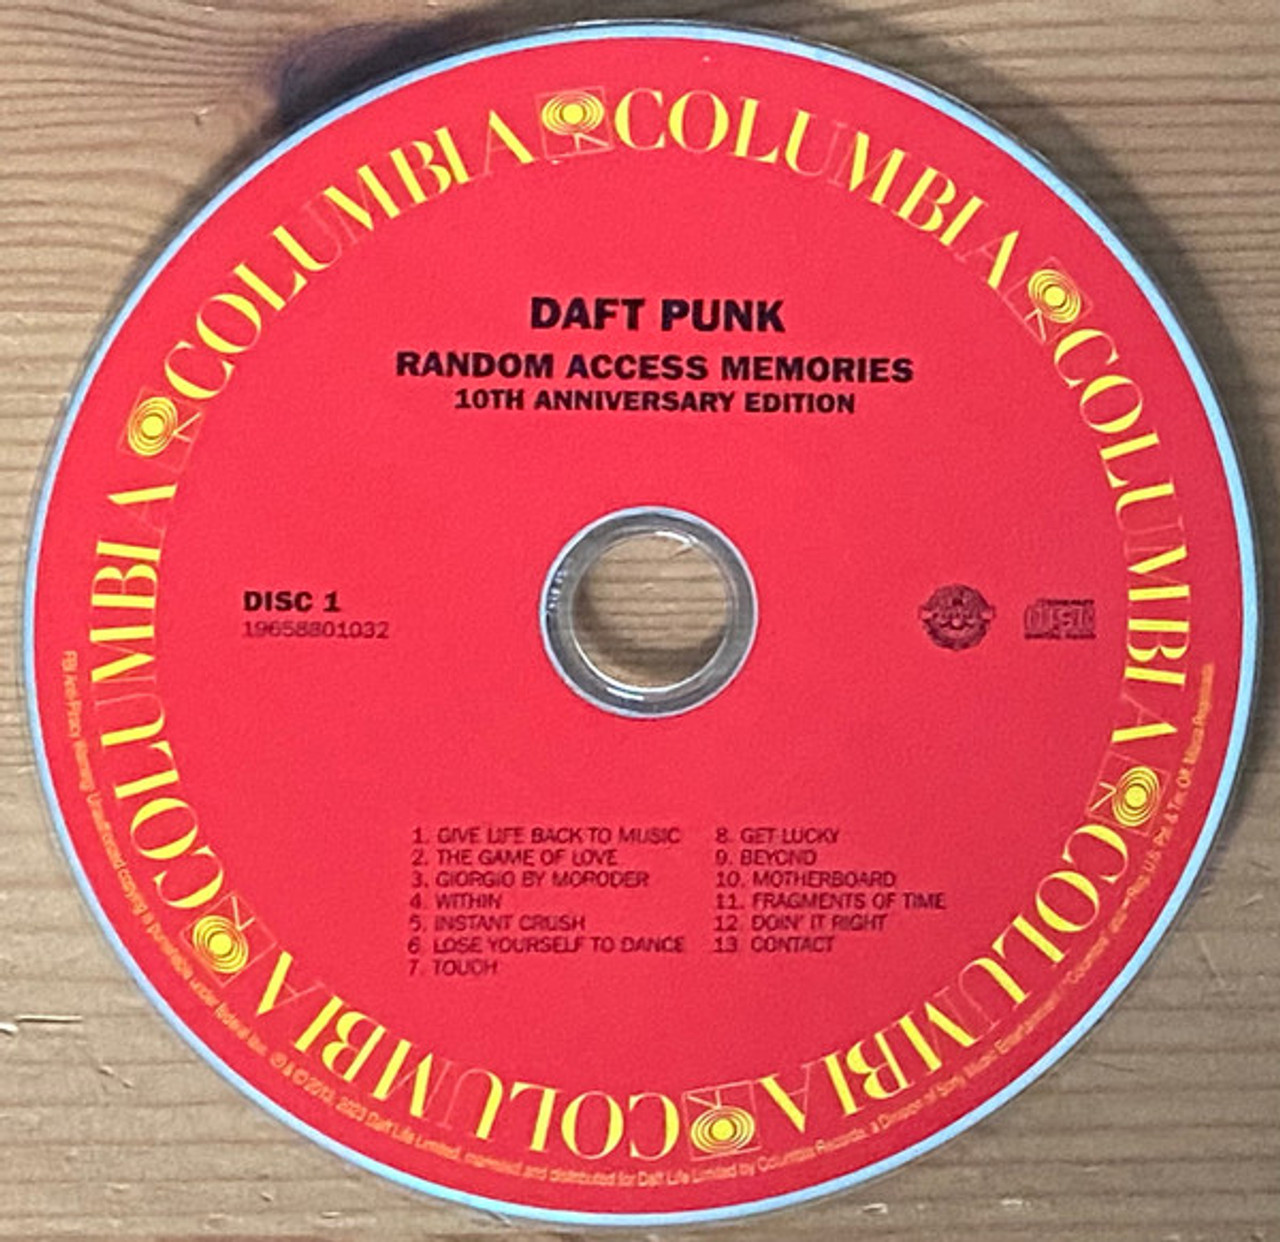 Random Access Memories (10th Anniversary Edition) - Daft Punk  (#196588010323)